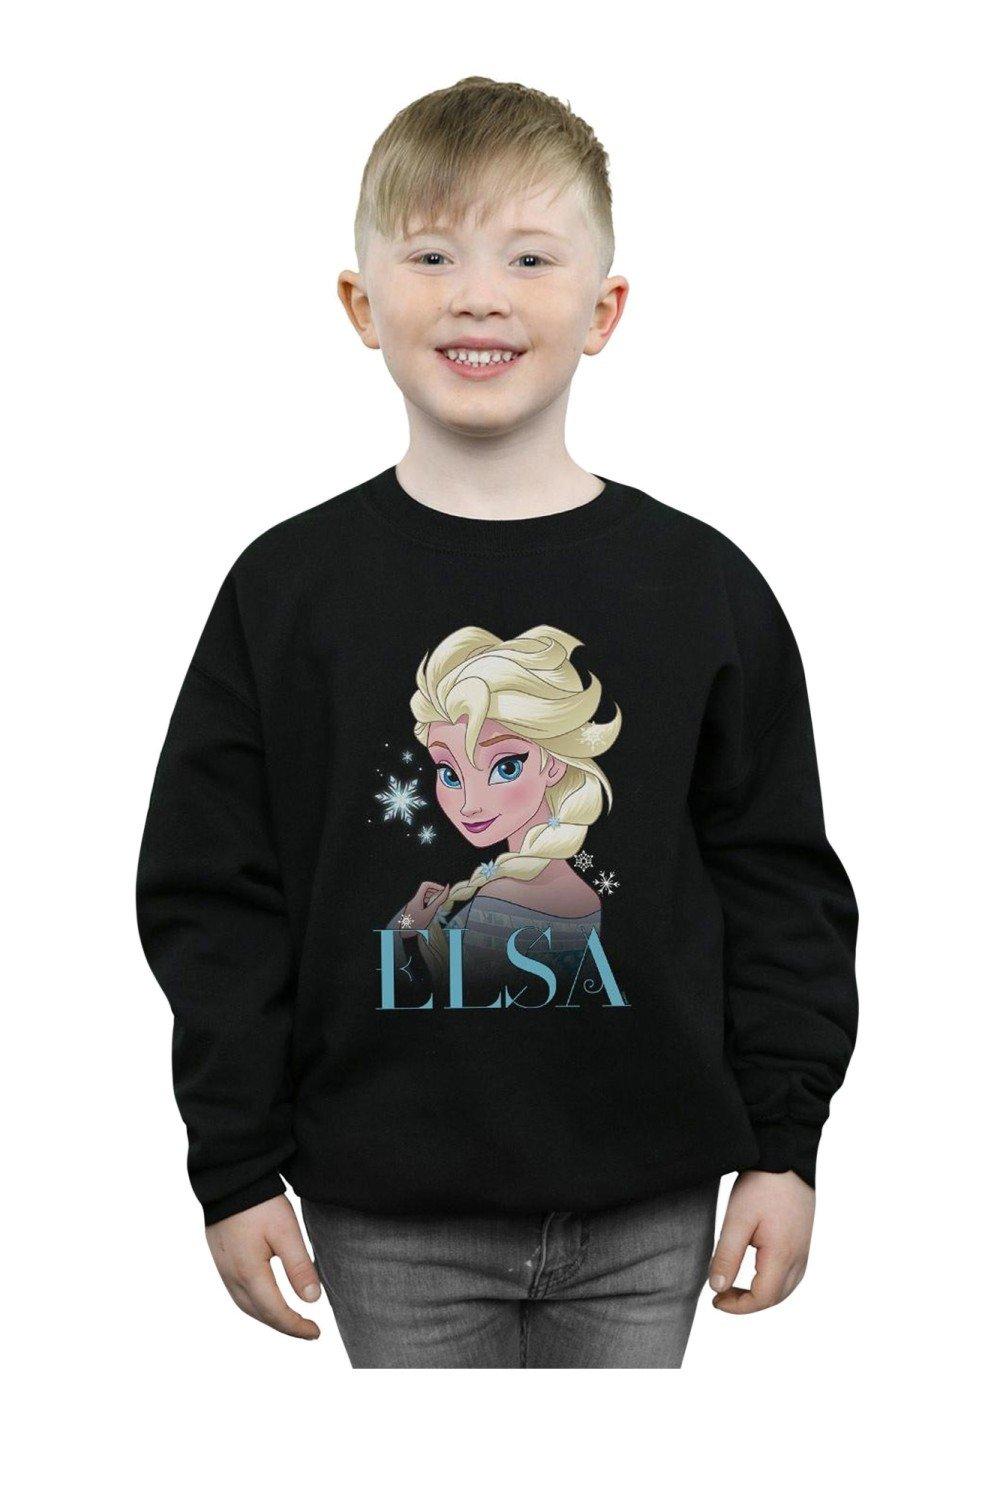 Frozen Elsa Snowflake Portrait Sweatshirt